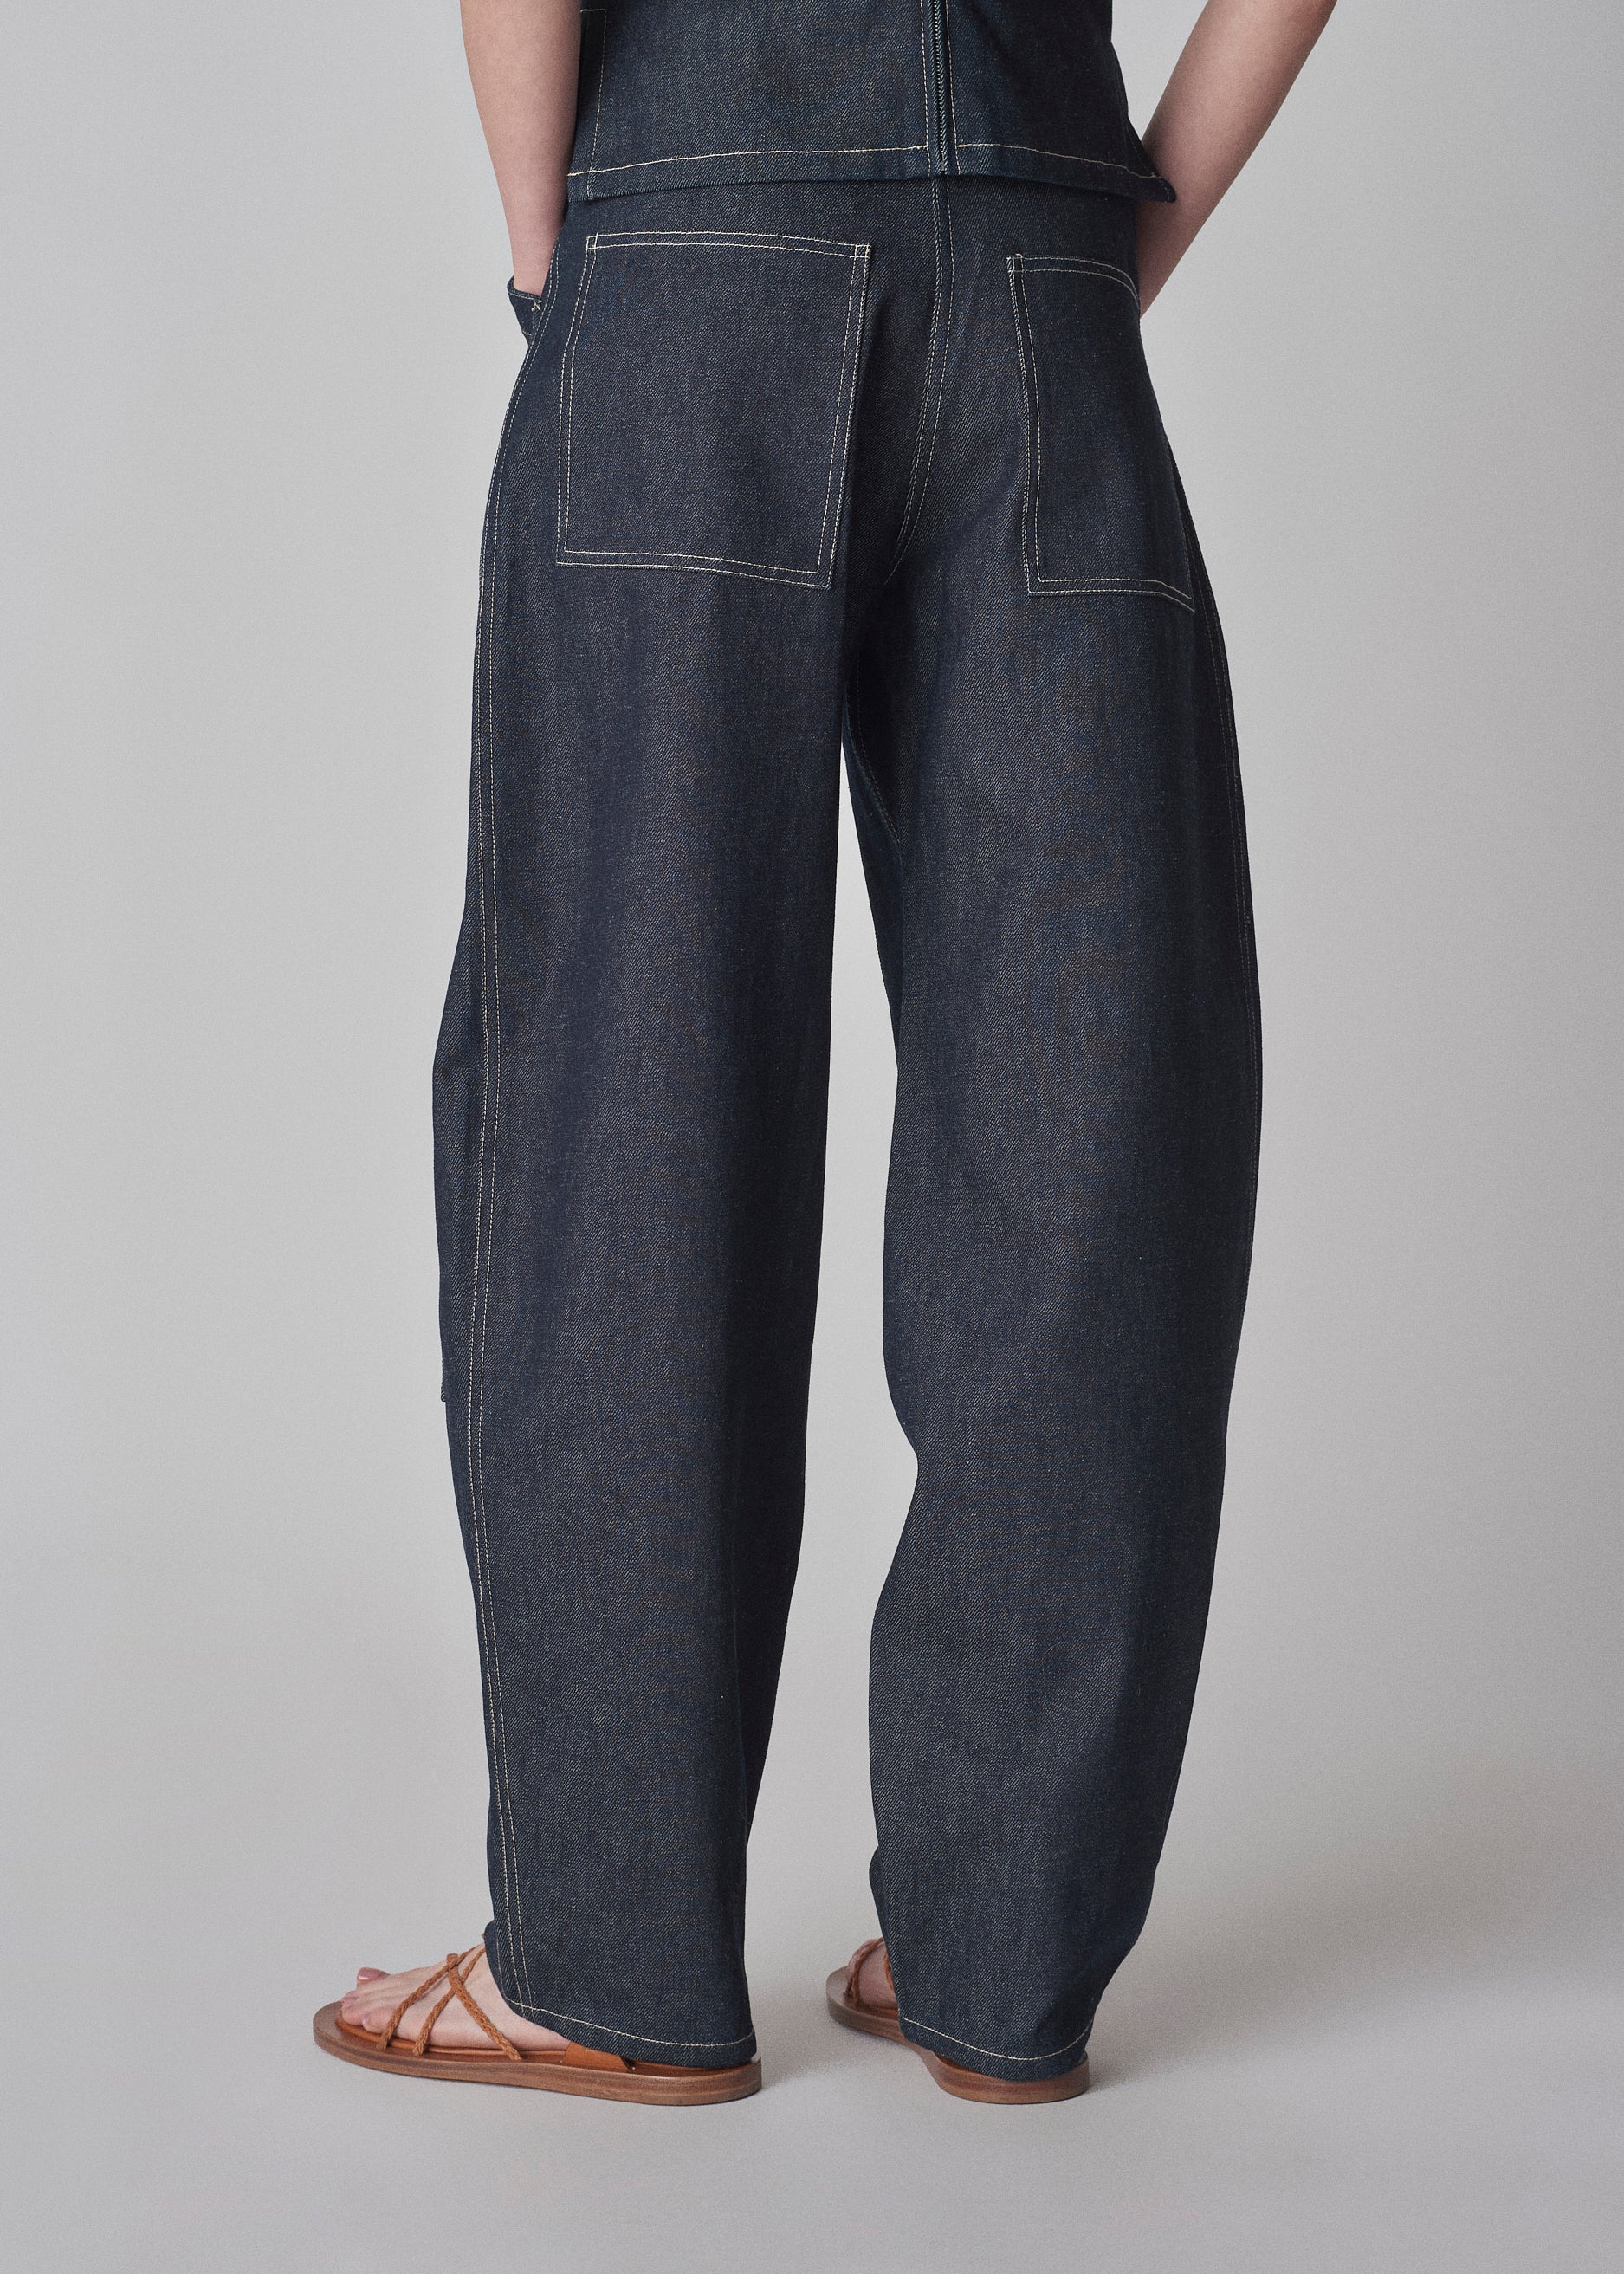 Workwear Patch Pocket Jean in Raw Denim - Indigo - CO Collections